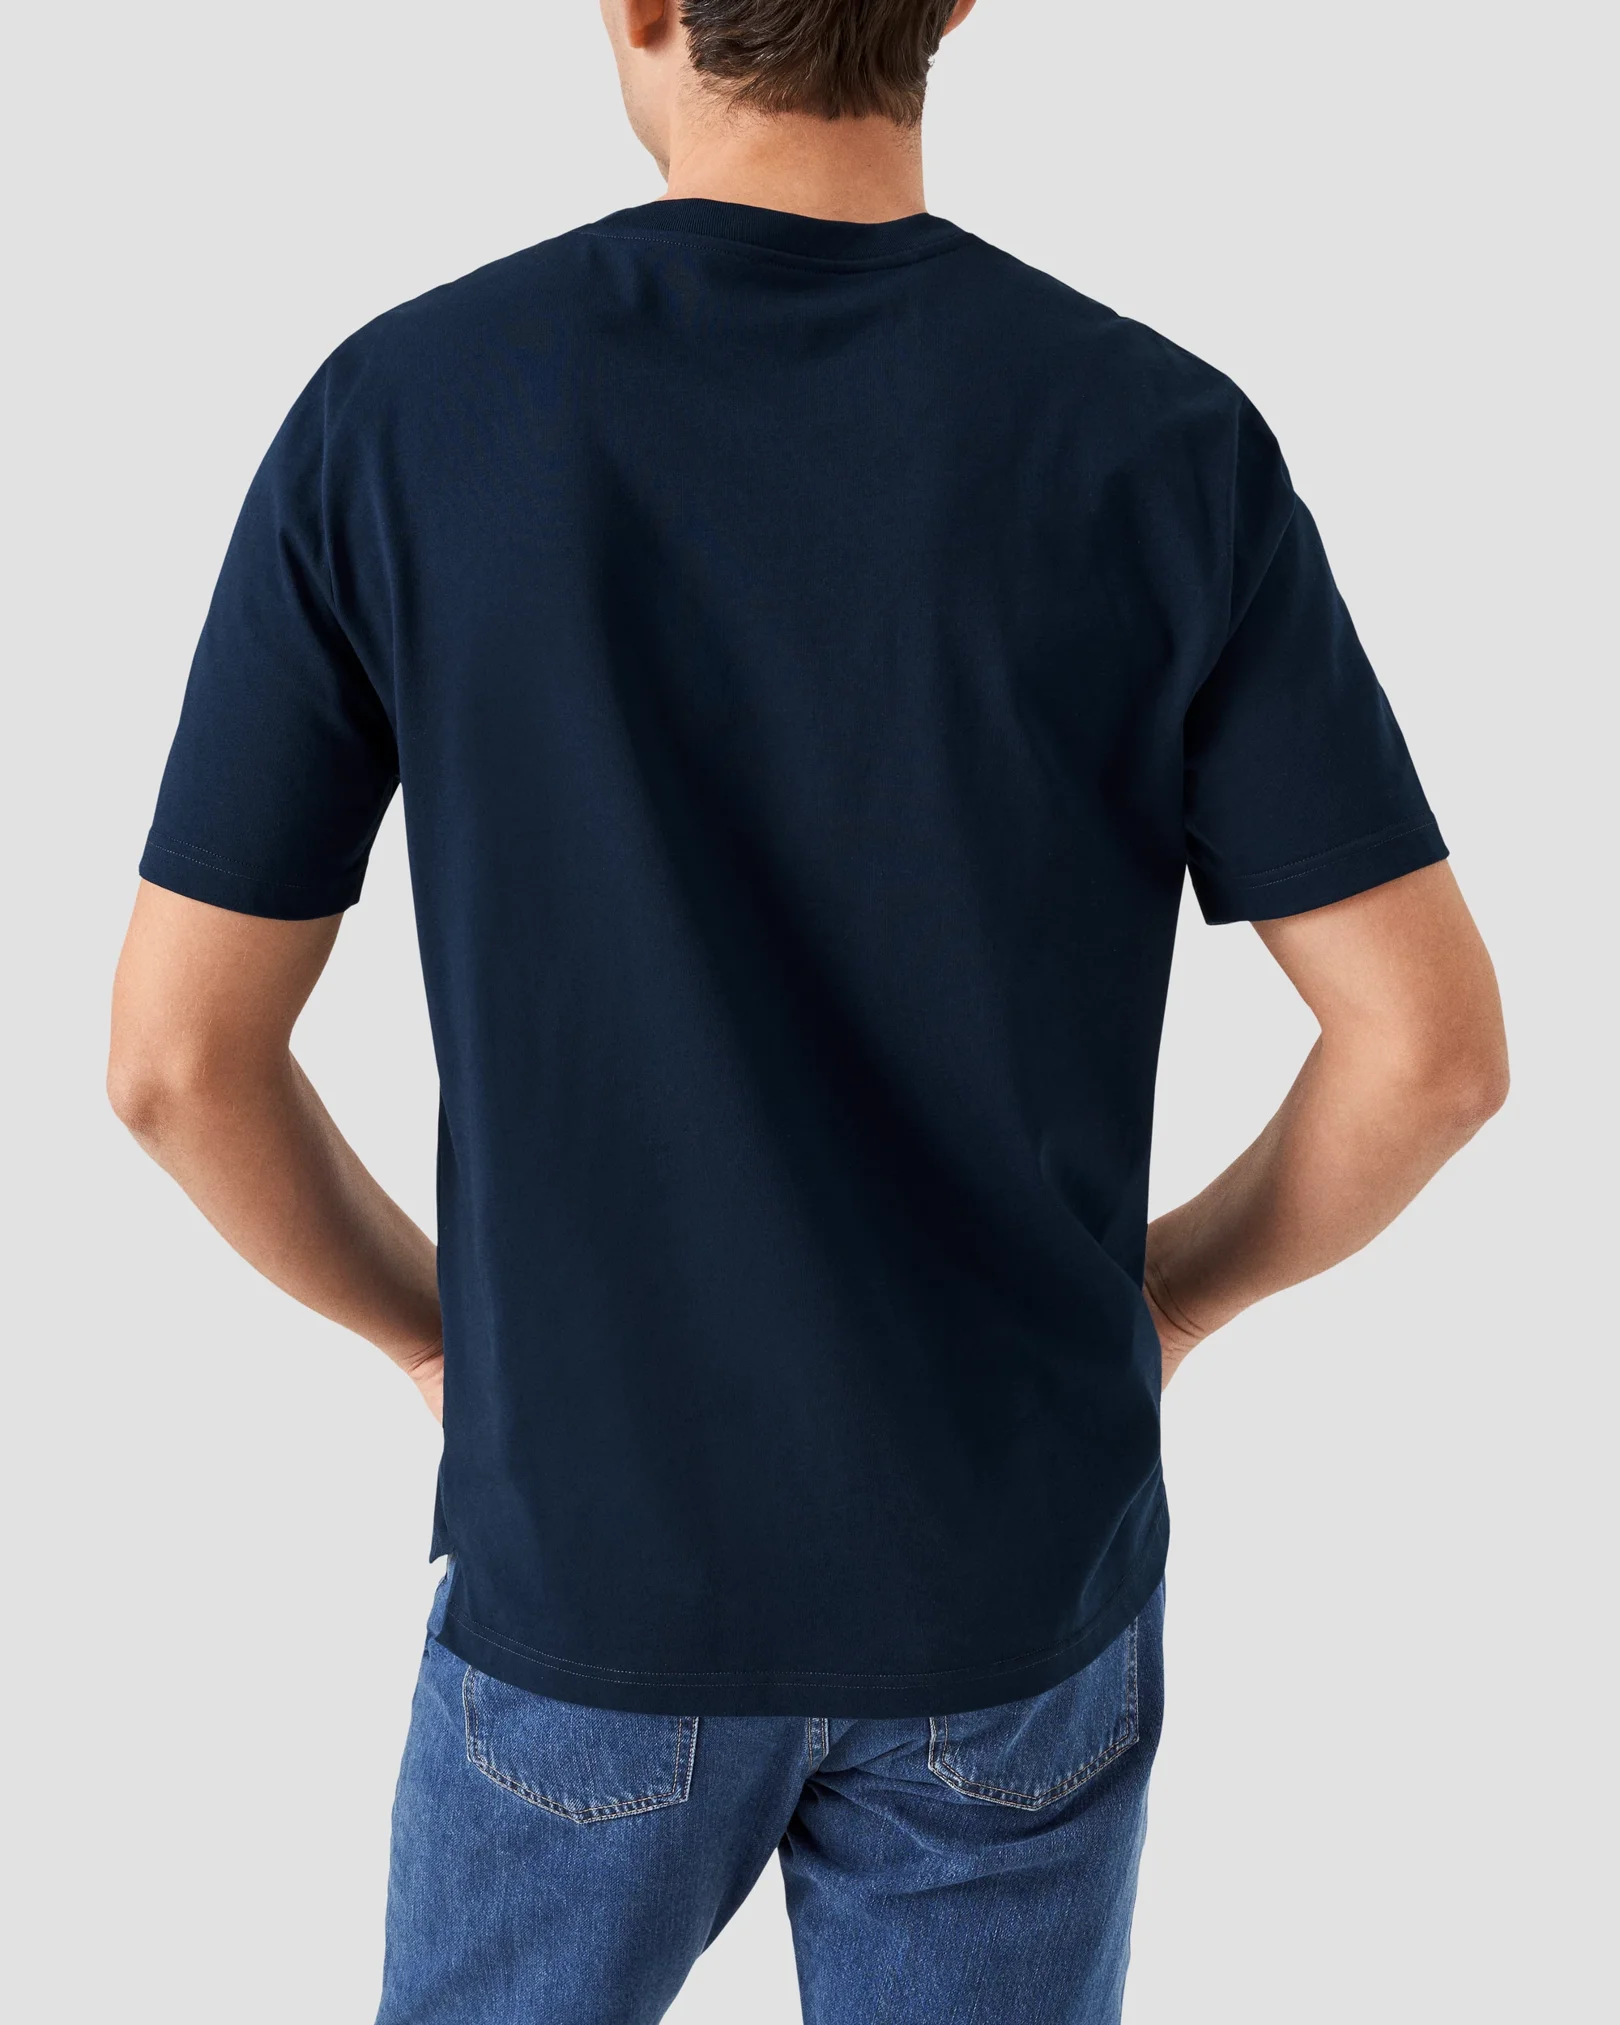 Eton - navy blue crew neck short sleeve t shirt